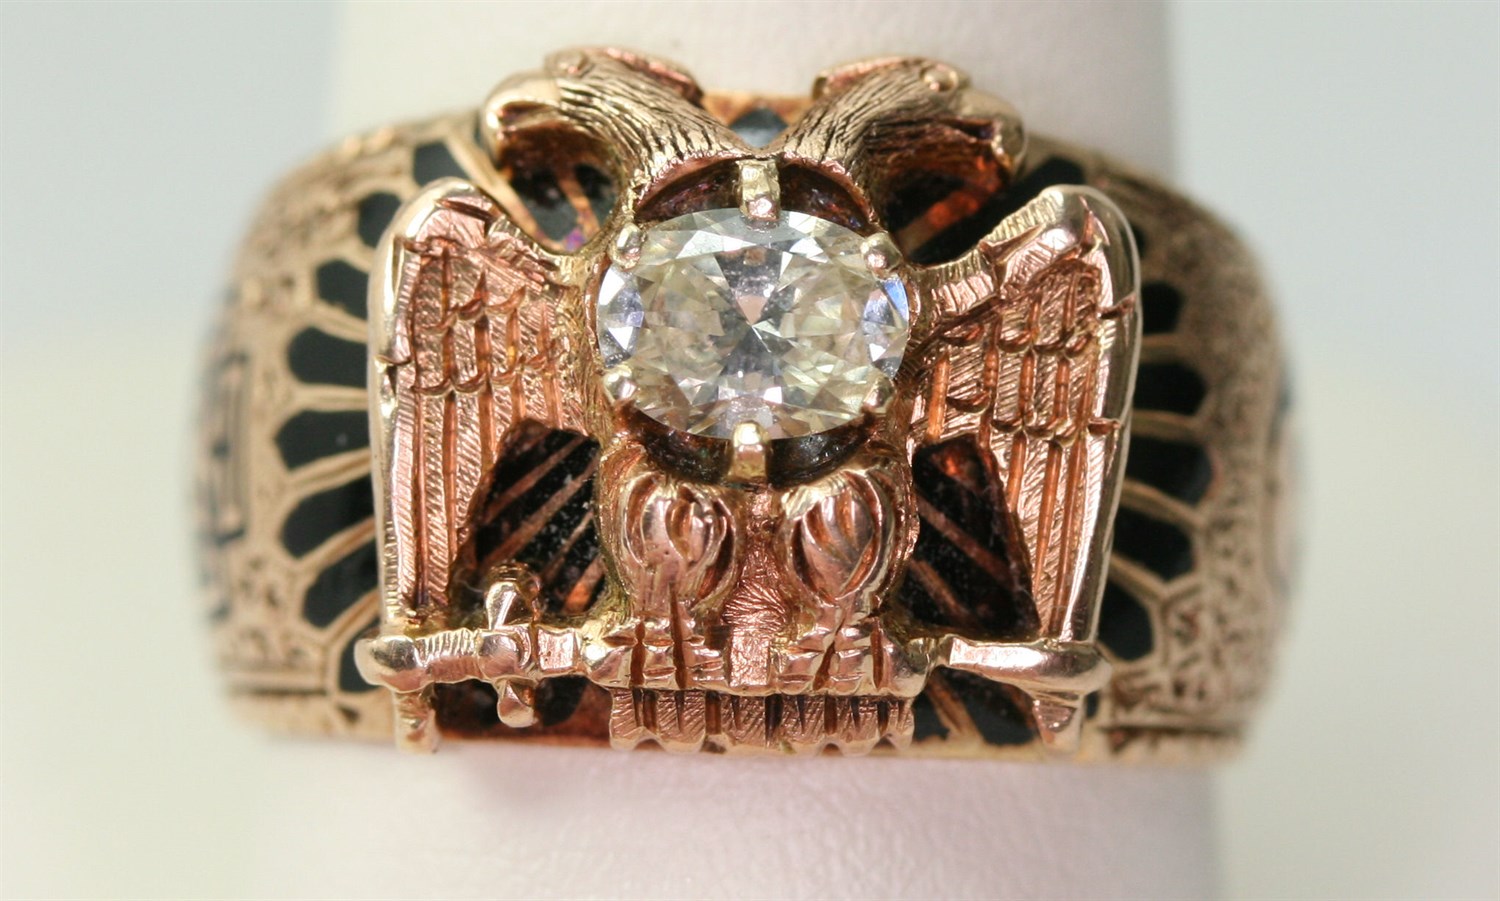 Lot 36 - An Edwardian gold, diamond set and enamelled Scottish Rite ring